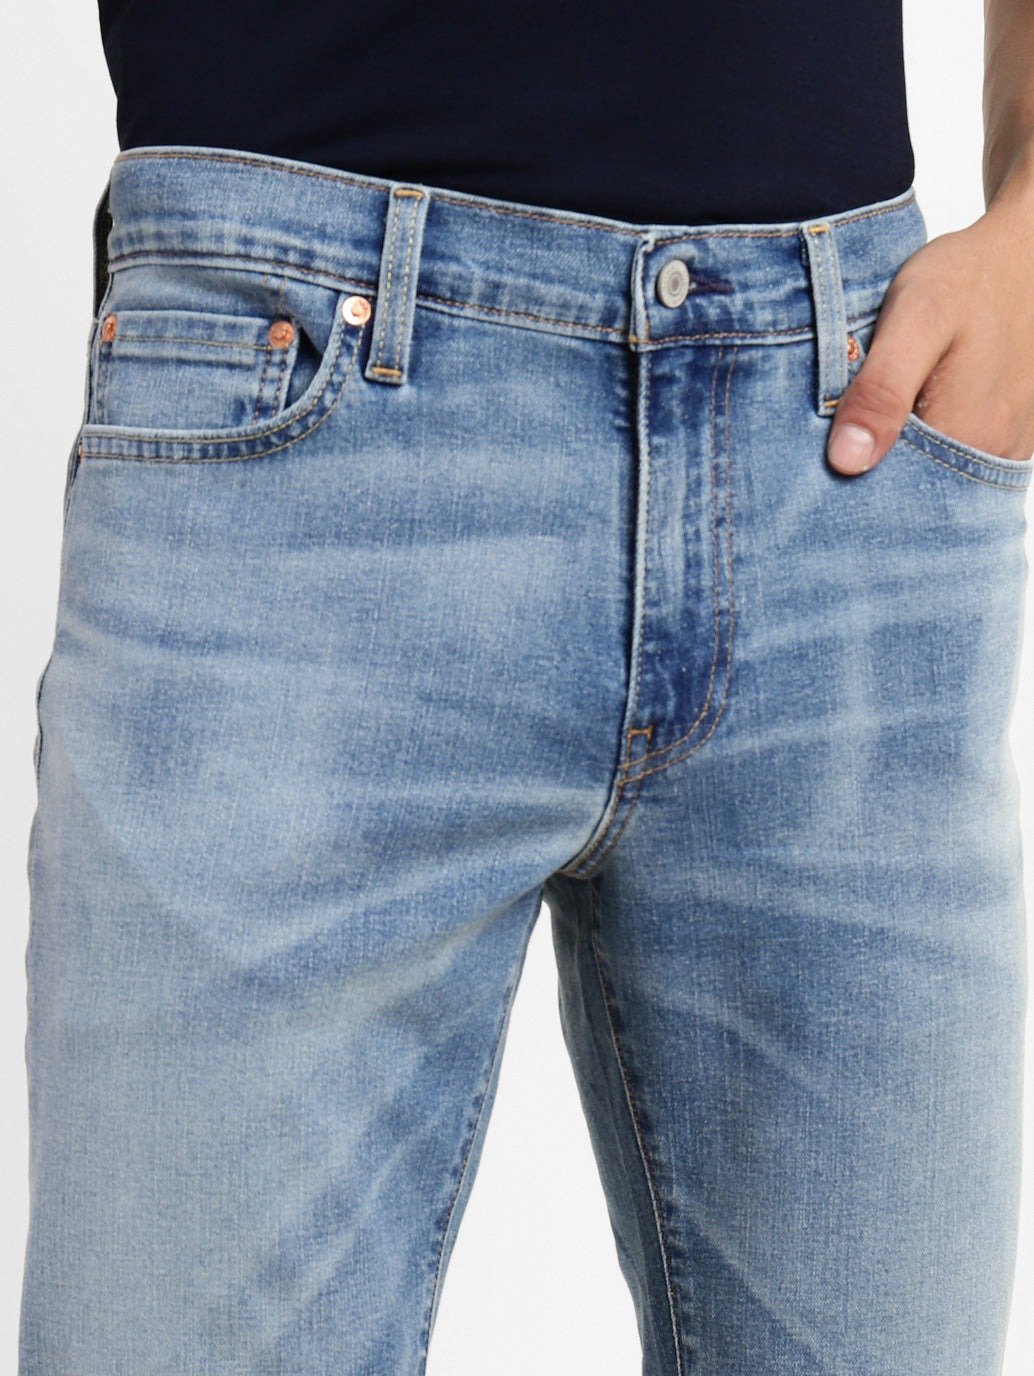 Men's 511 Light Indigo Slim Fit Jeans